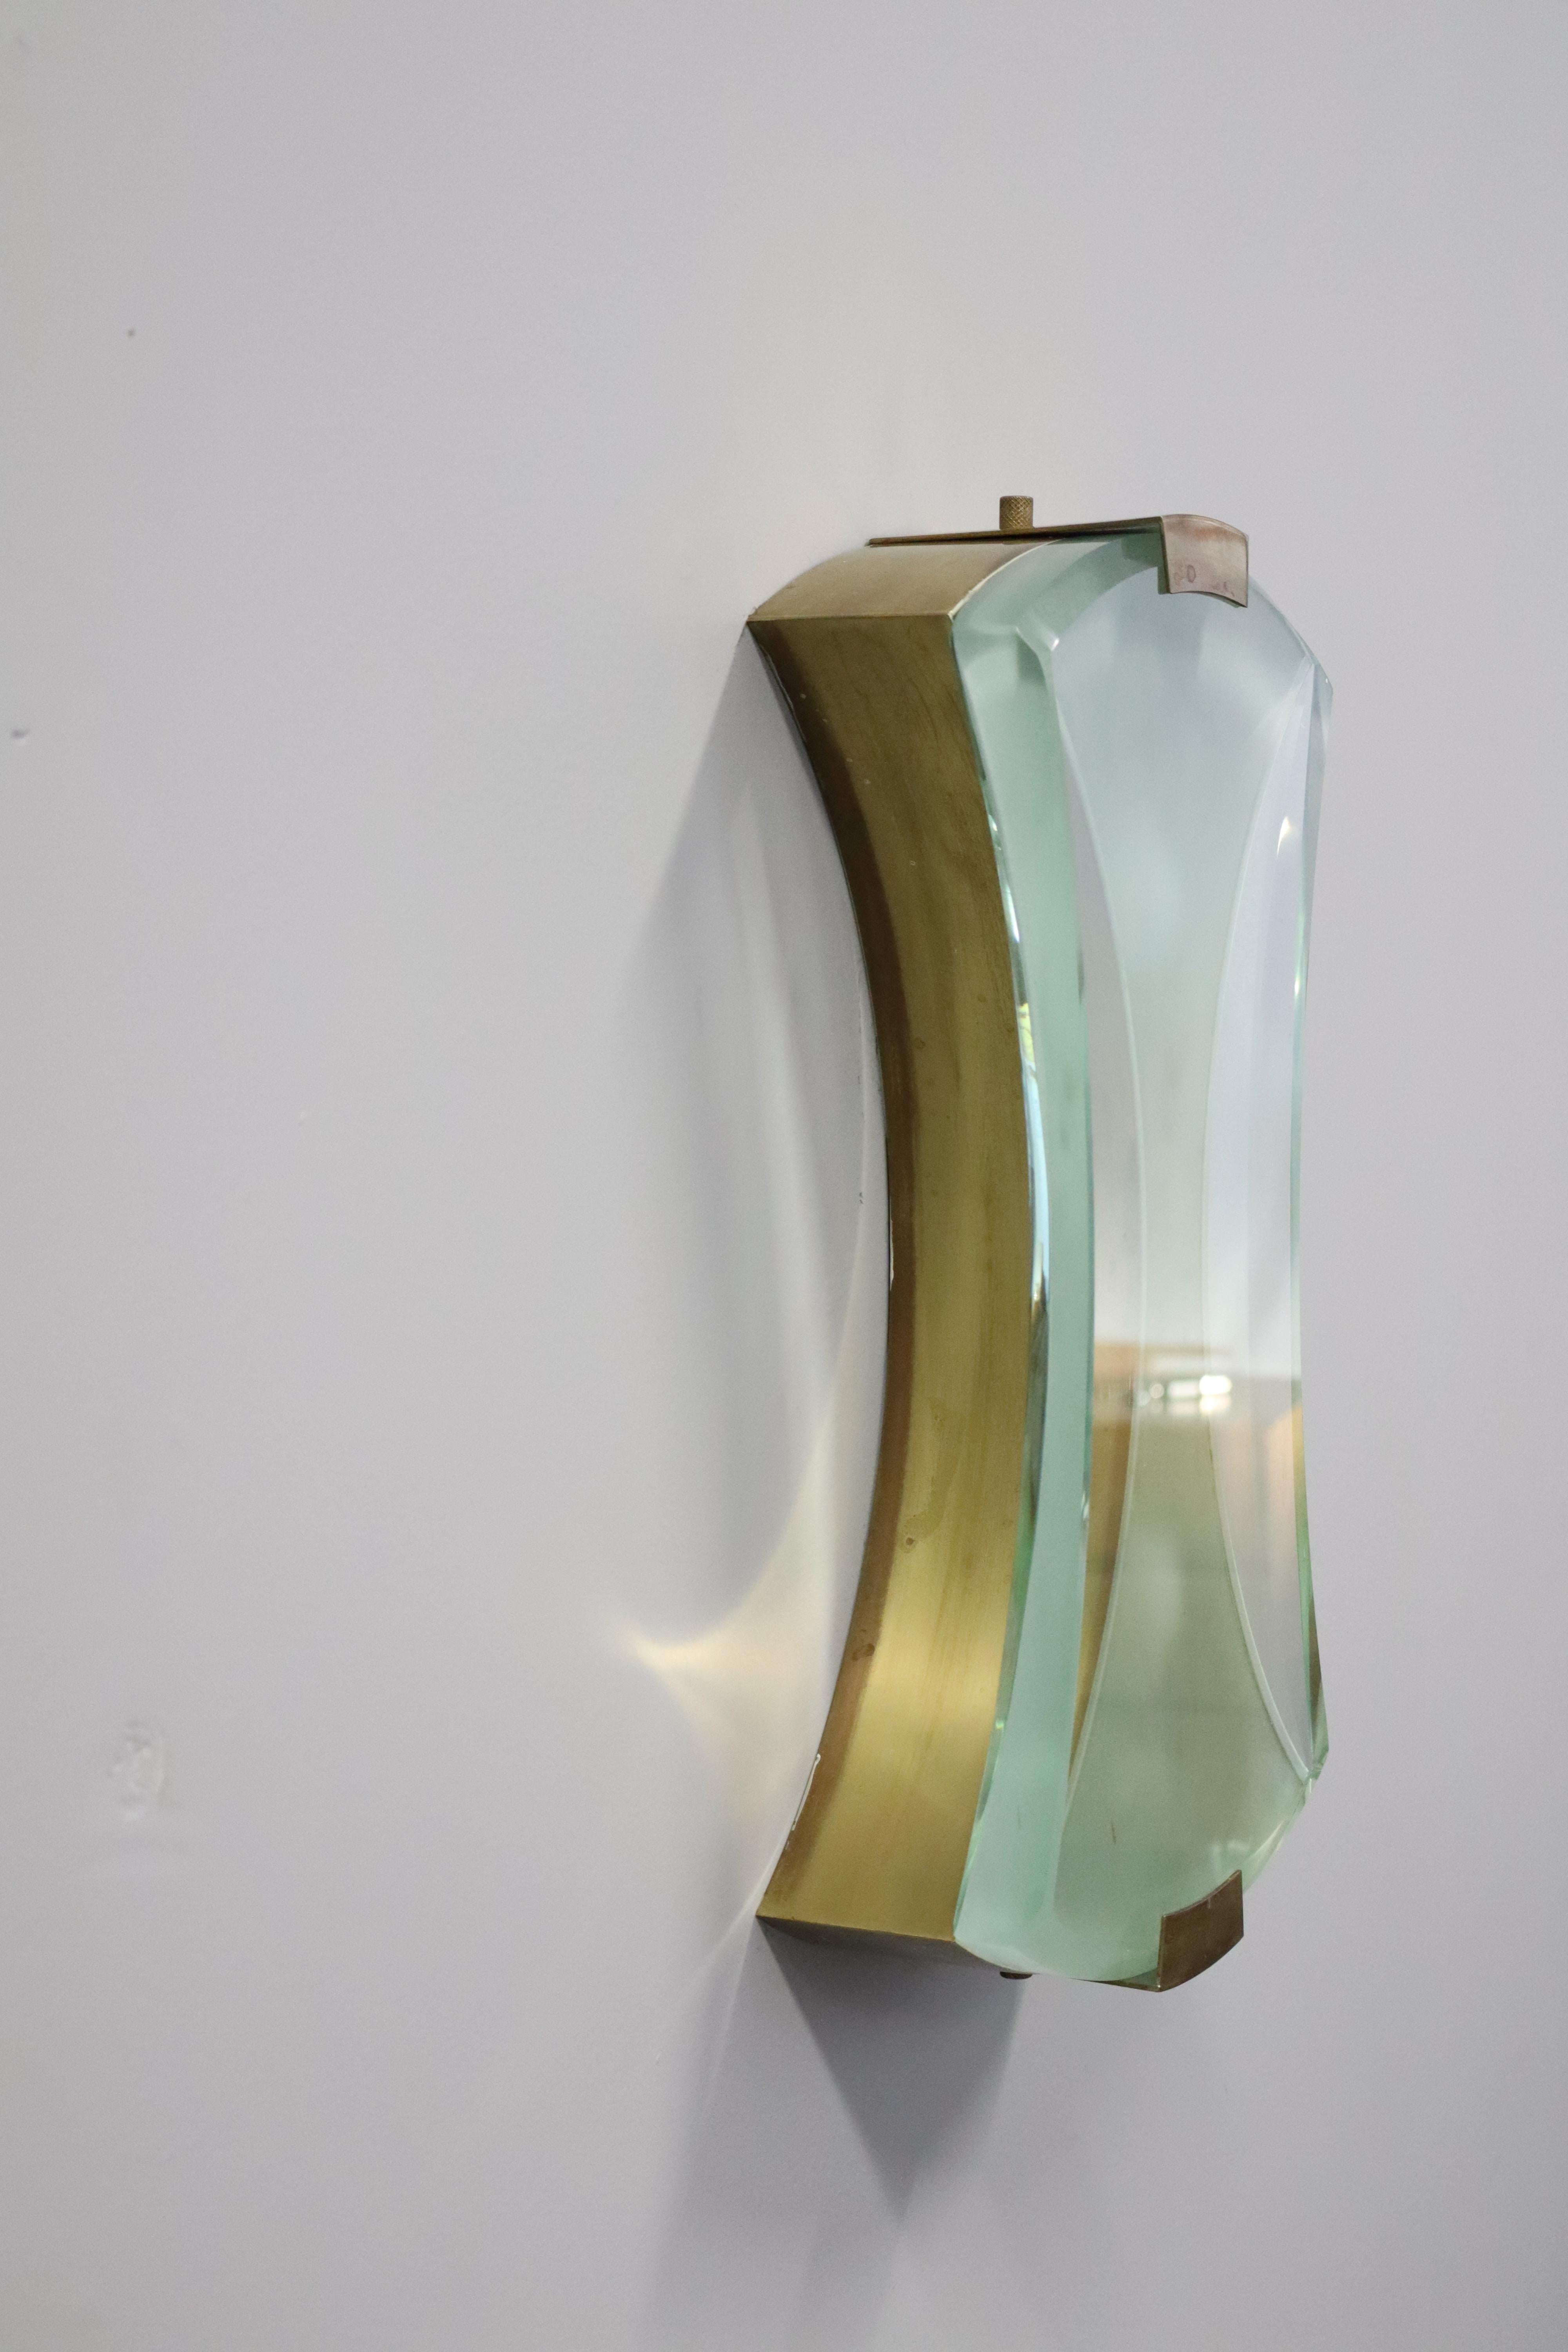 Max Ingrand For Fontana Arte Rare Pair Of Wall Lights Model 2225 5